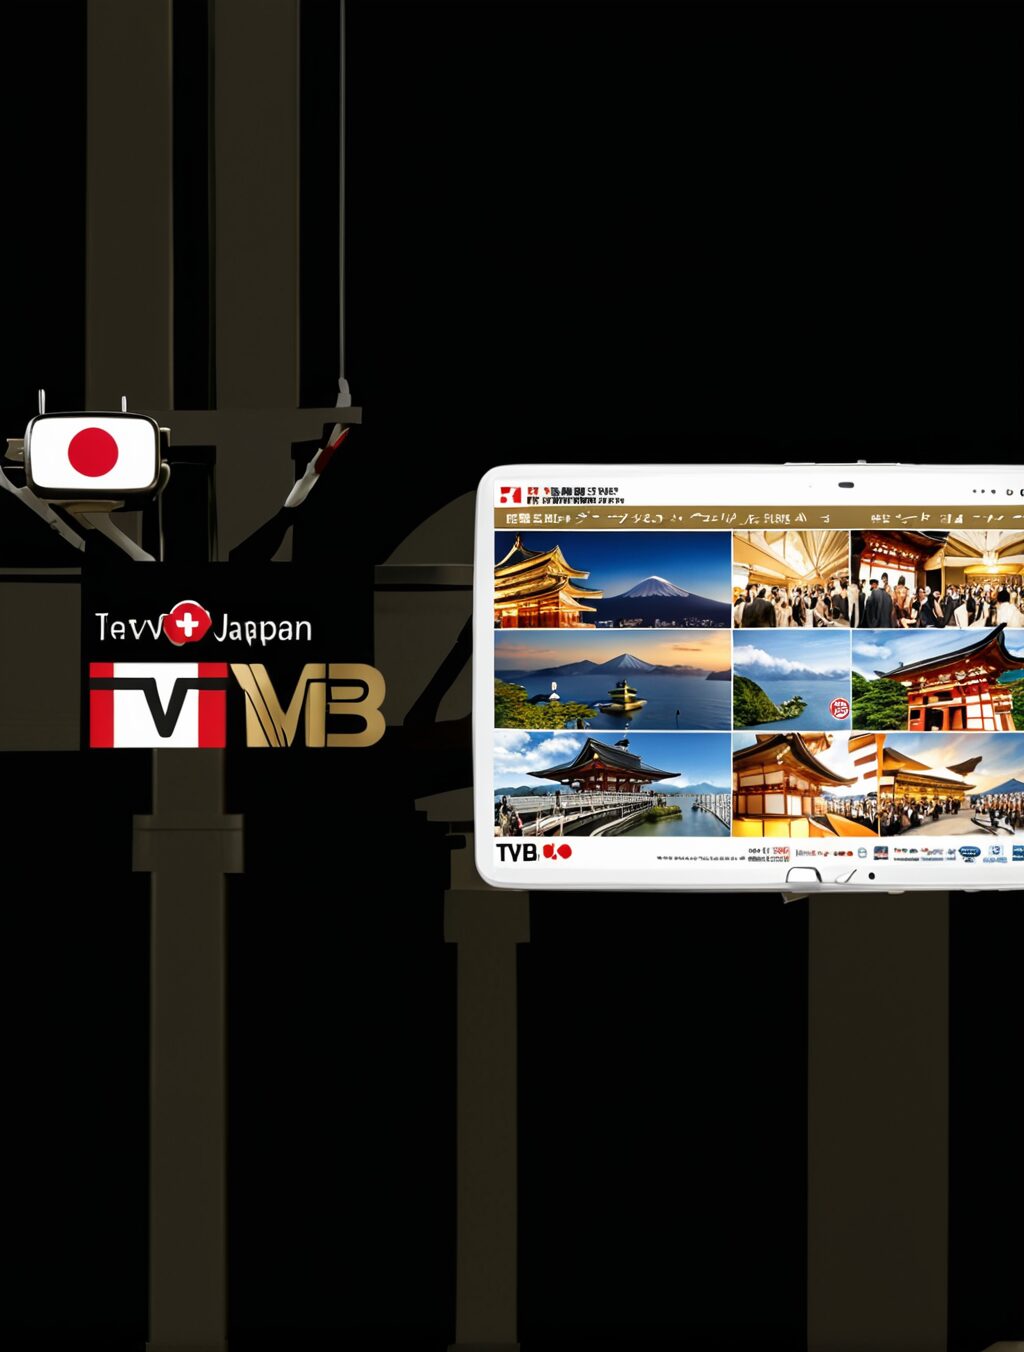 tvb japan travel show